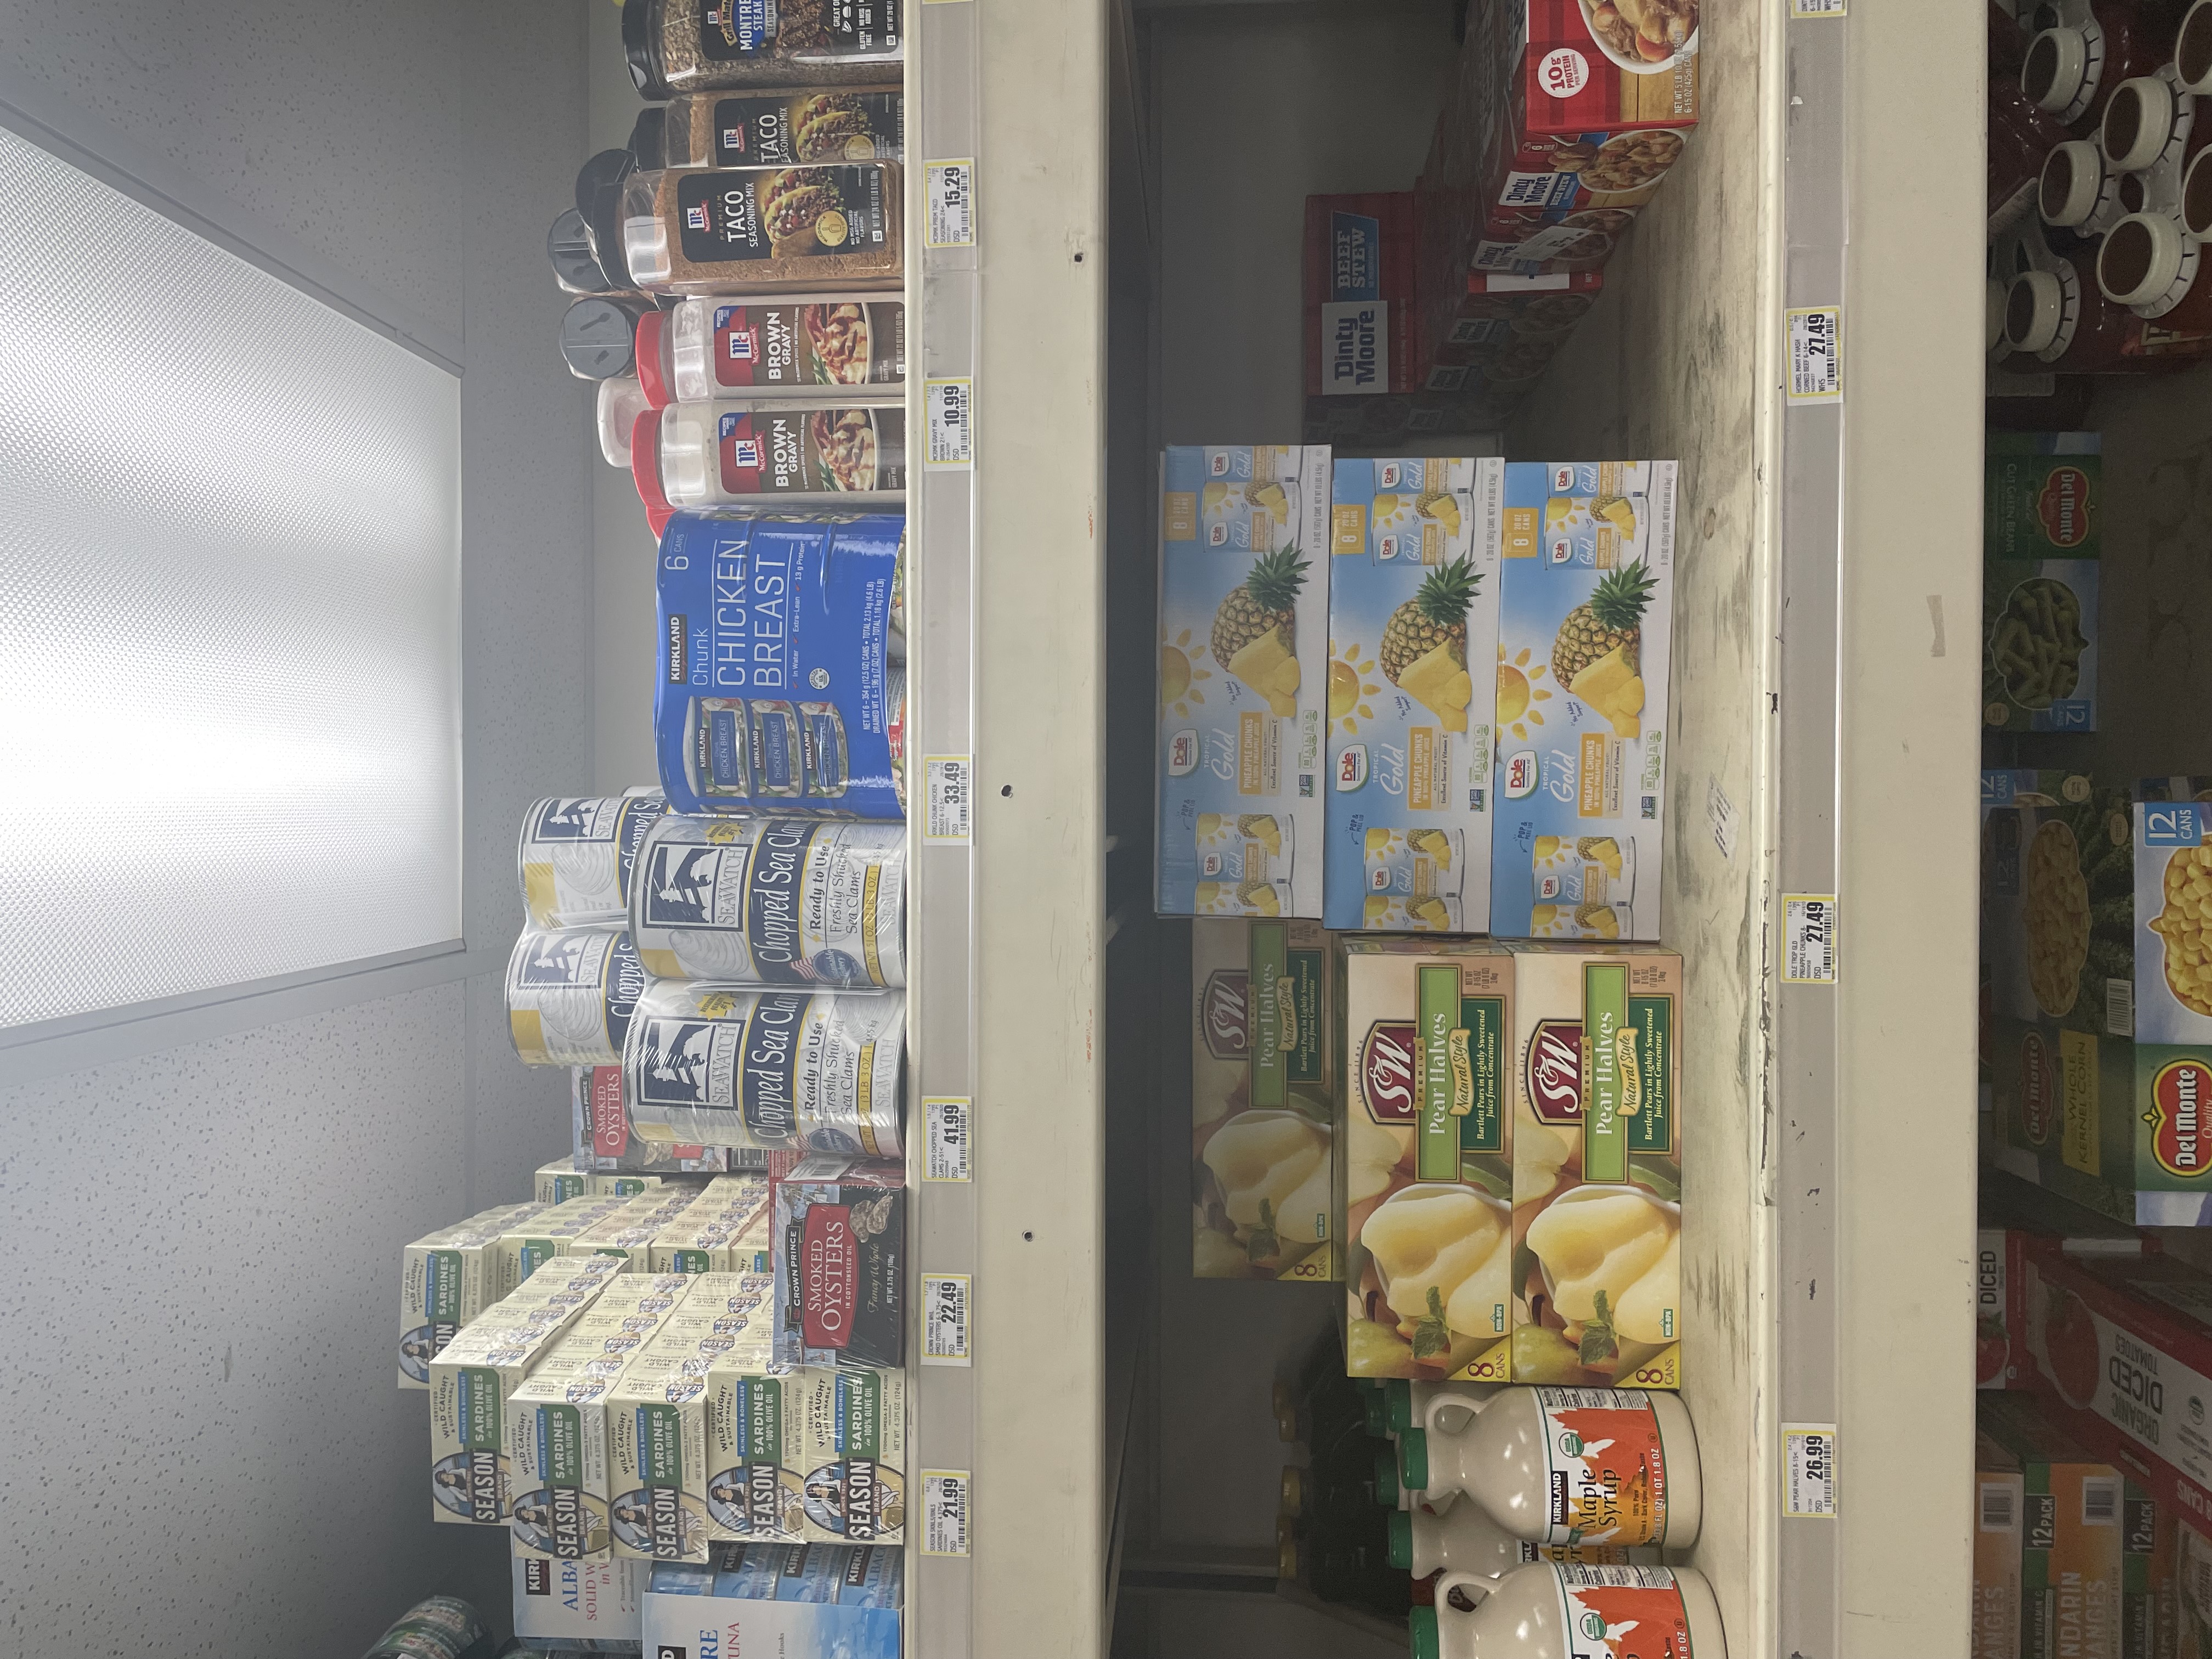 Canned goods on shelf